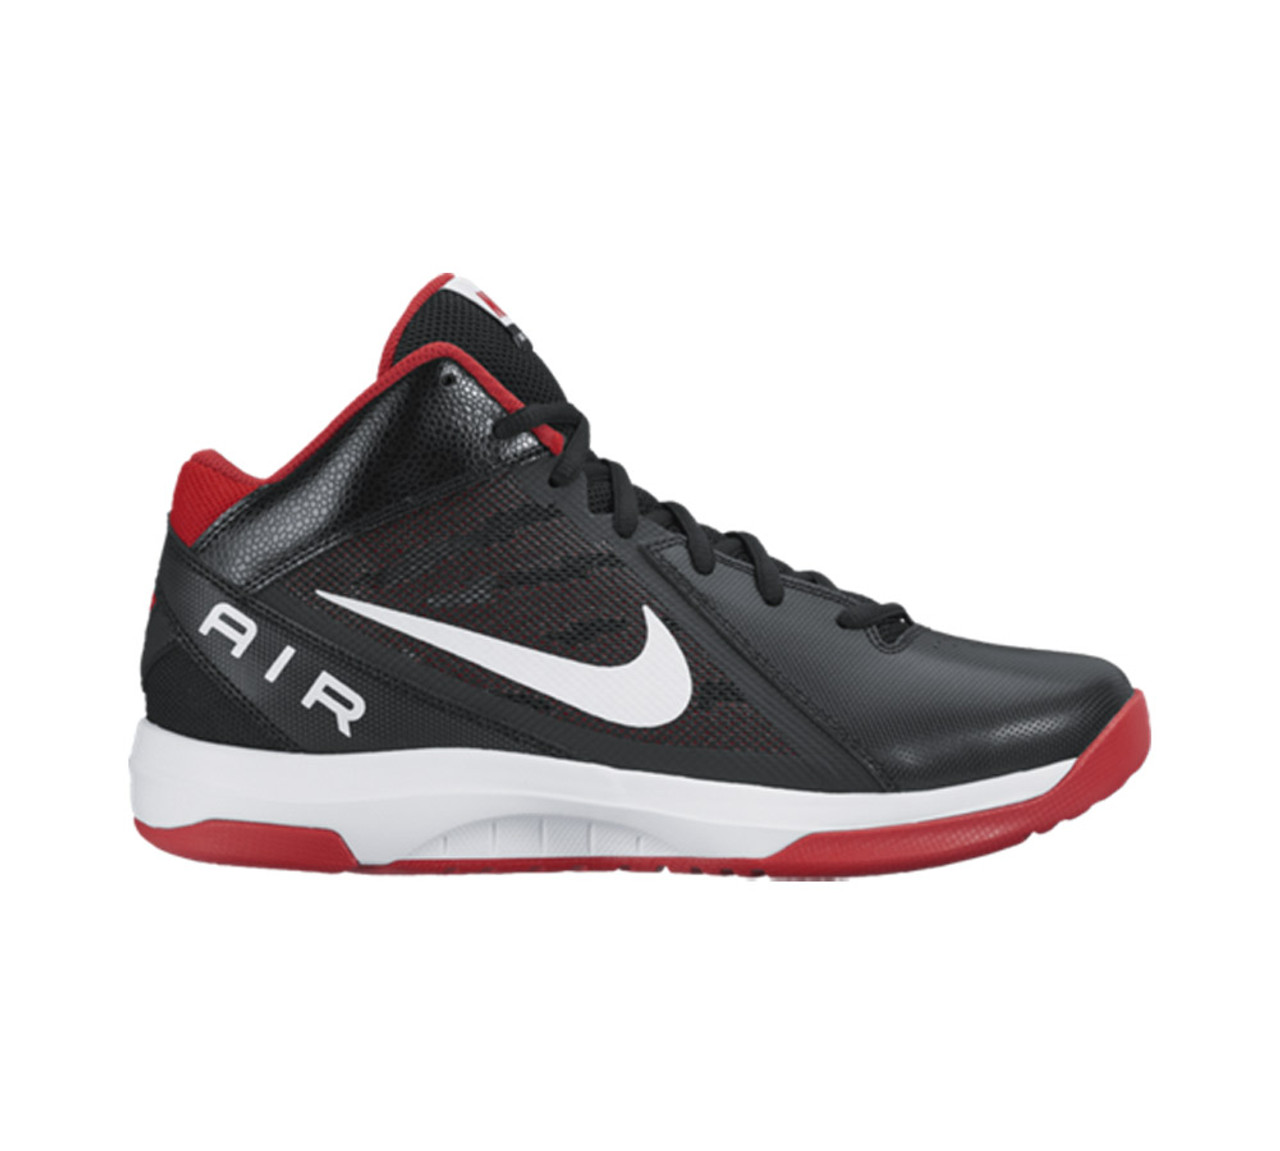 Nike Men's The Air Overplay IX Shoe - Black | Discount Nike Men's Athletic & More - Shoolu.com | Shoolu.com